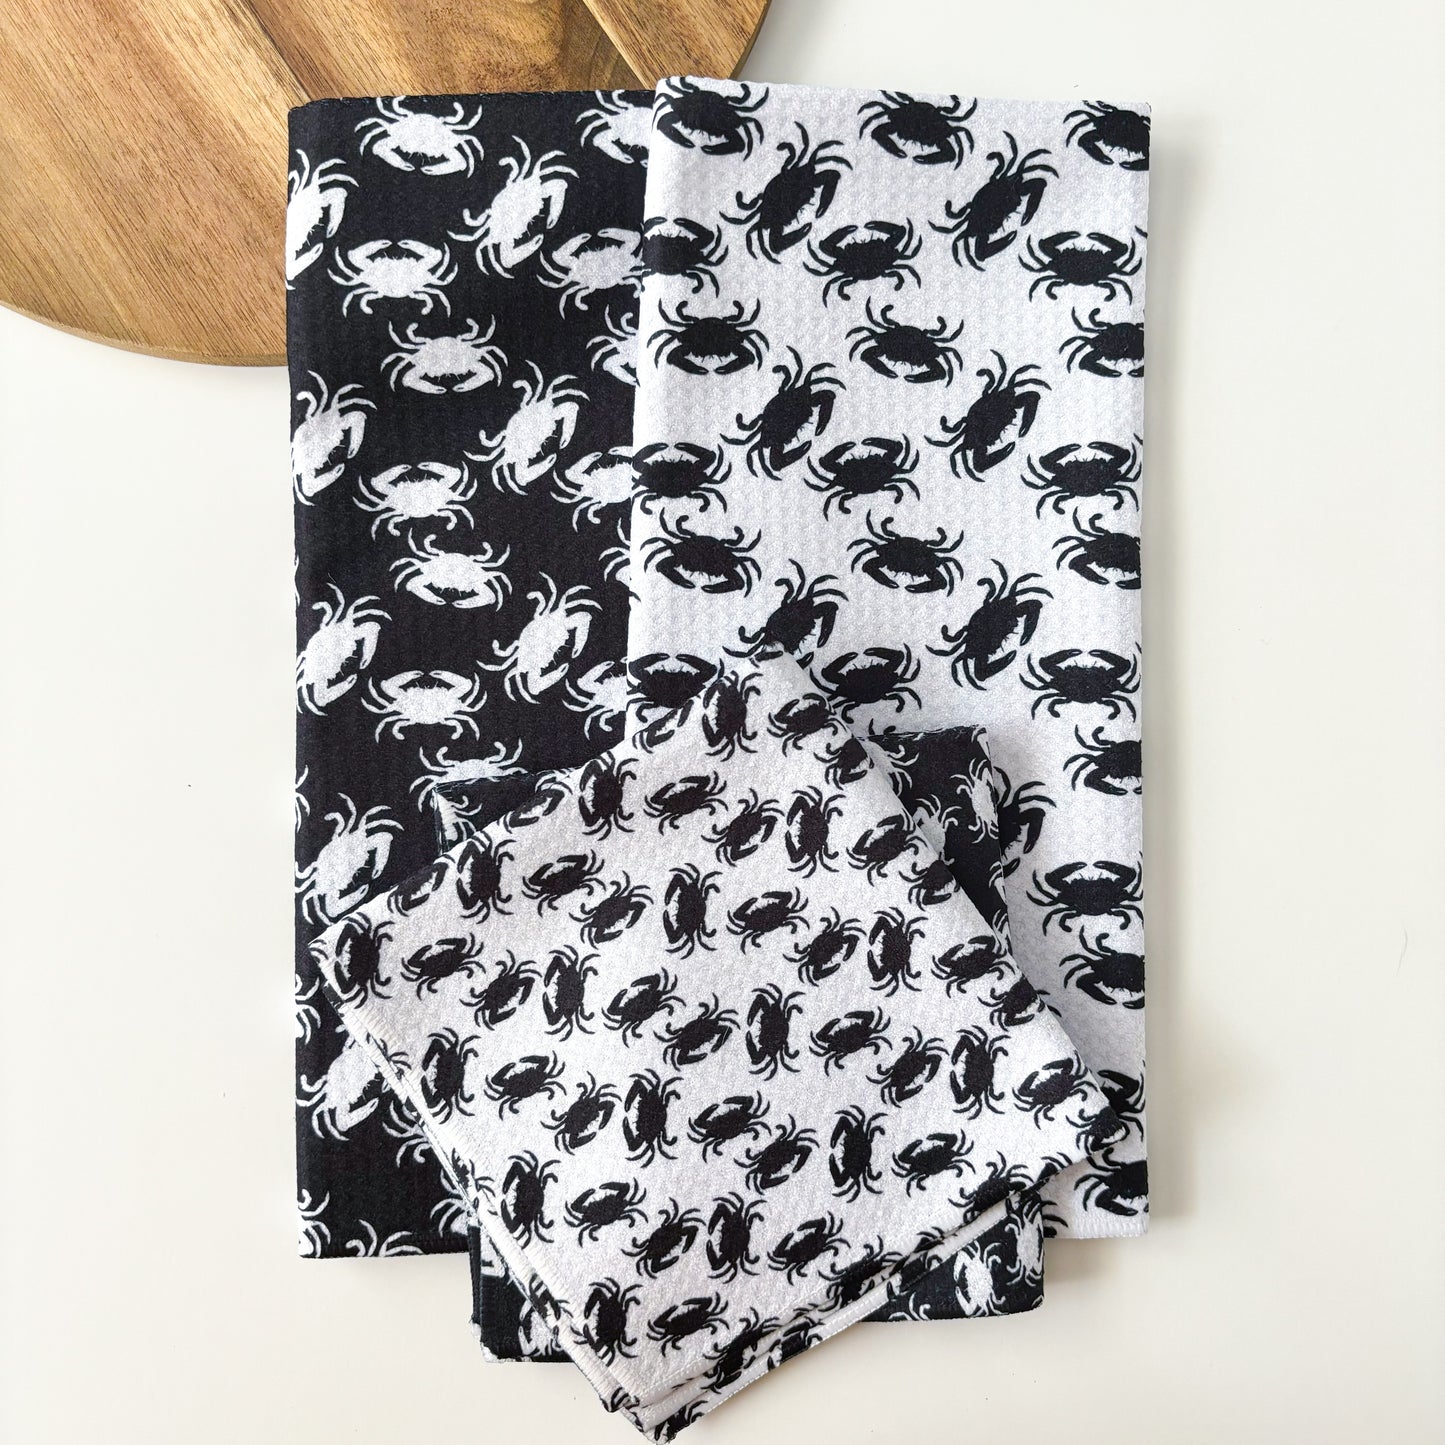 Black and White Crab Kitchen Towel Gift Set